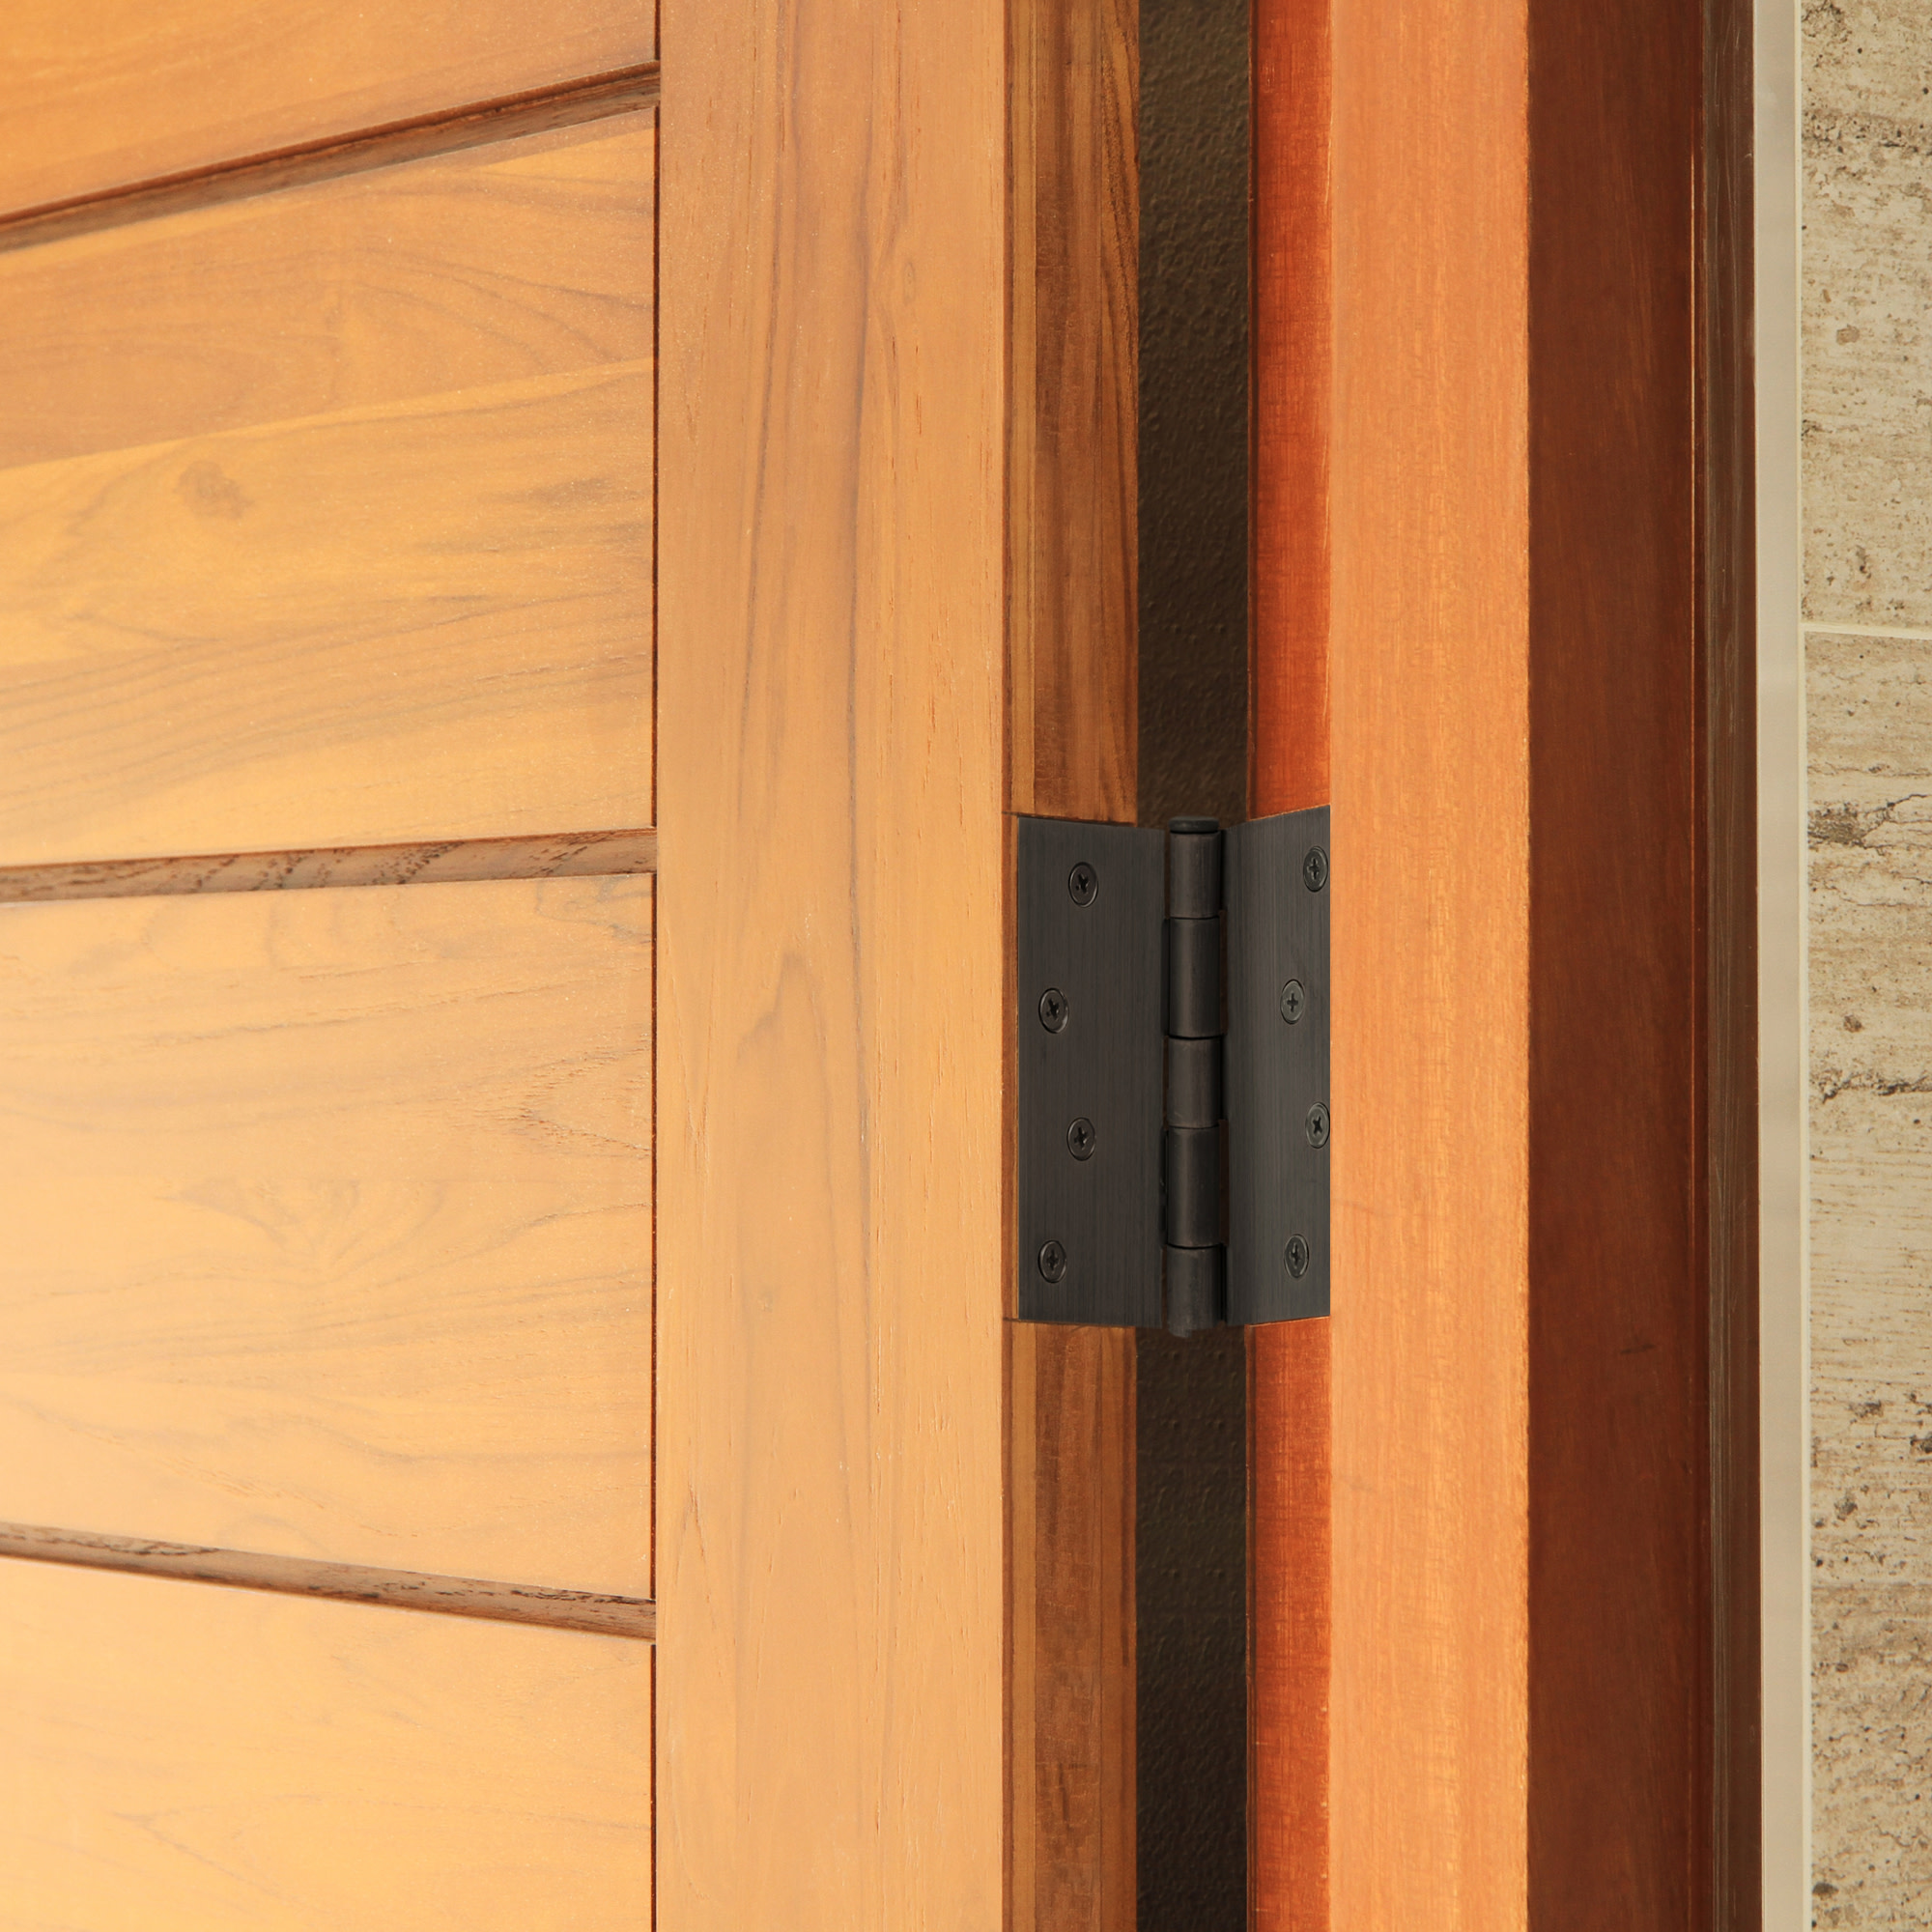 Design House  Door Hinge in Oil Rubbed Bronze, 4-Inch, Square Corner, 10-Pack - image 4 of 12